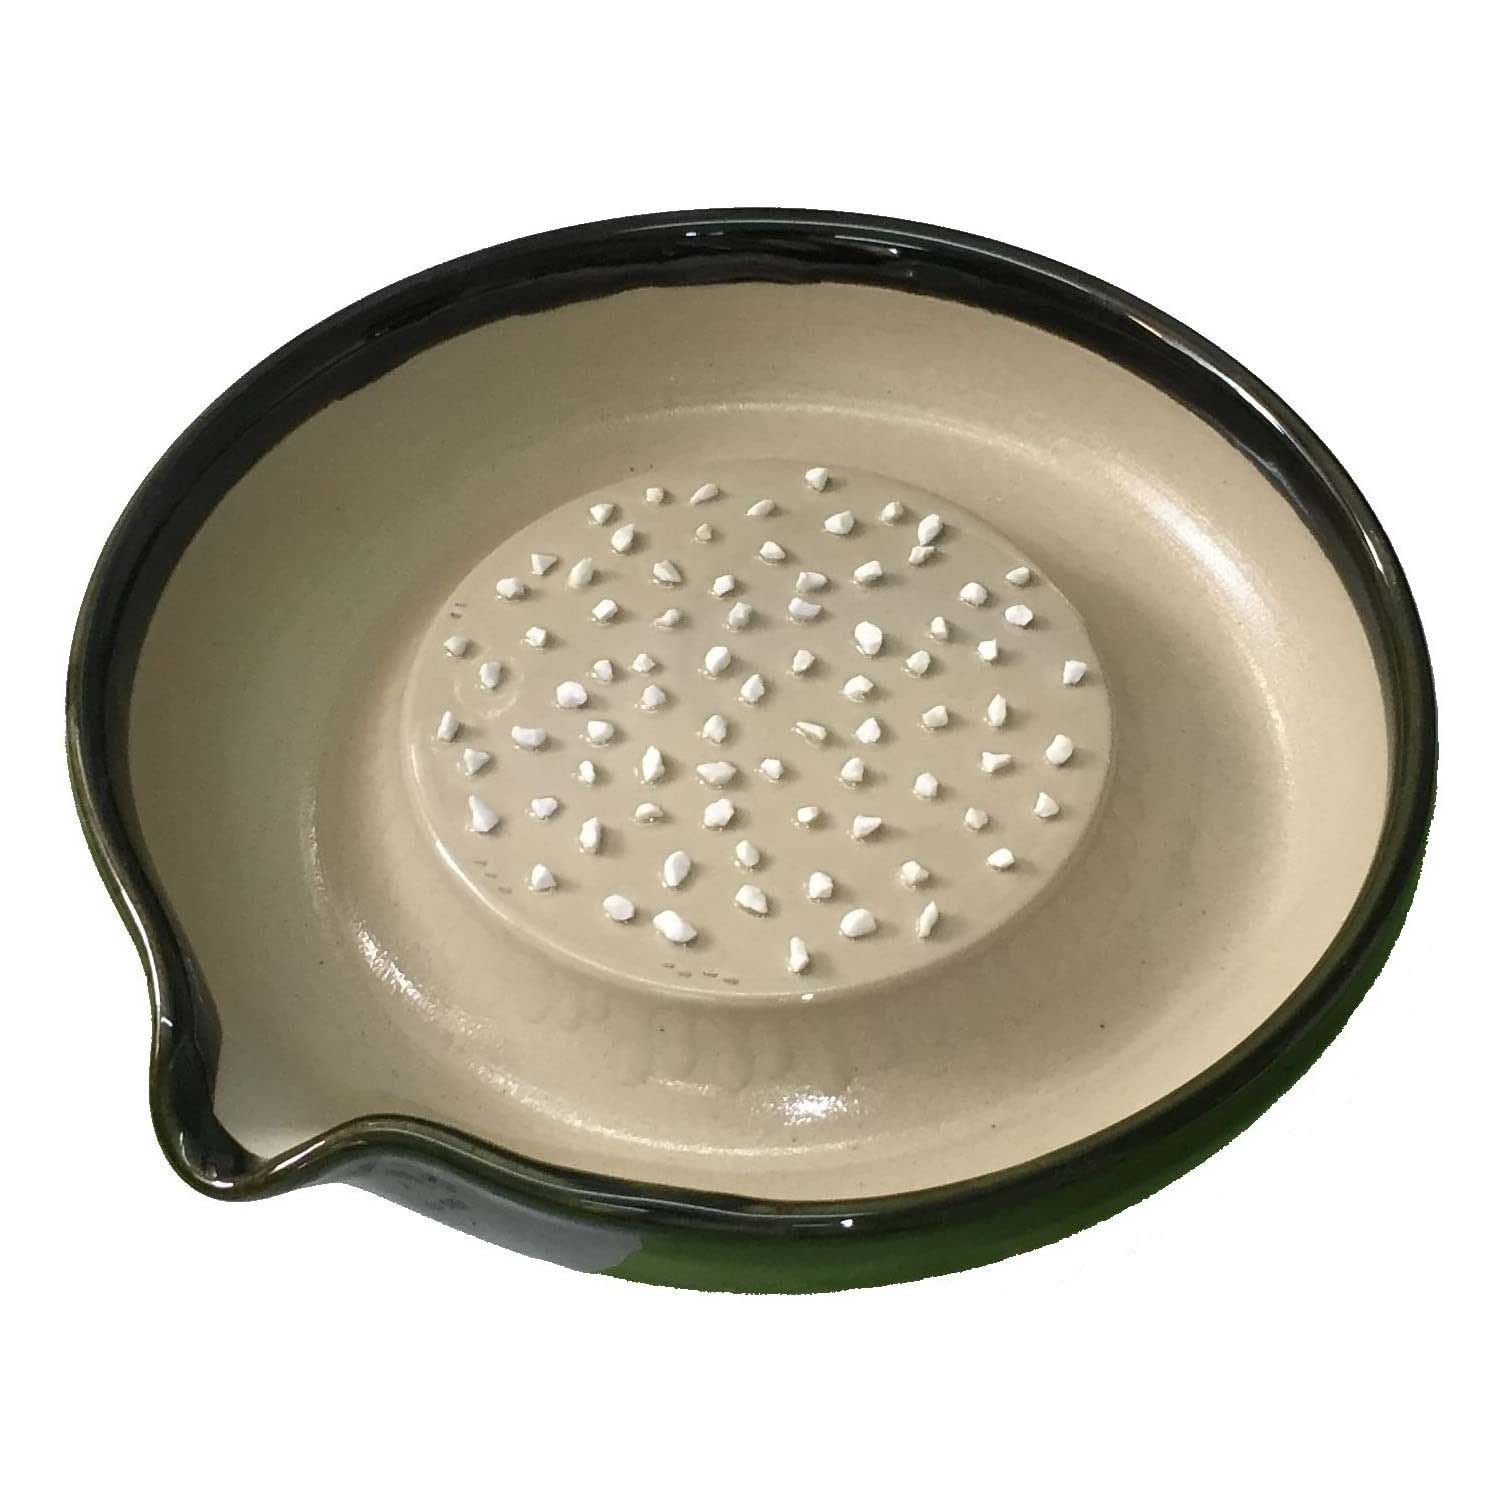 The Grate Plate 3 Piece Set: Ceramic Grater, Peeler, Brush - The